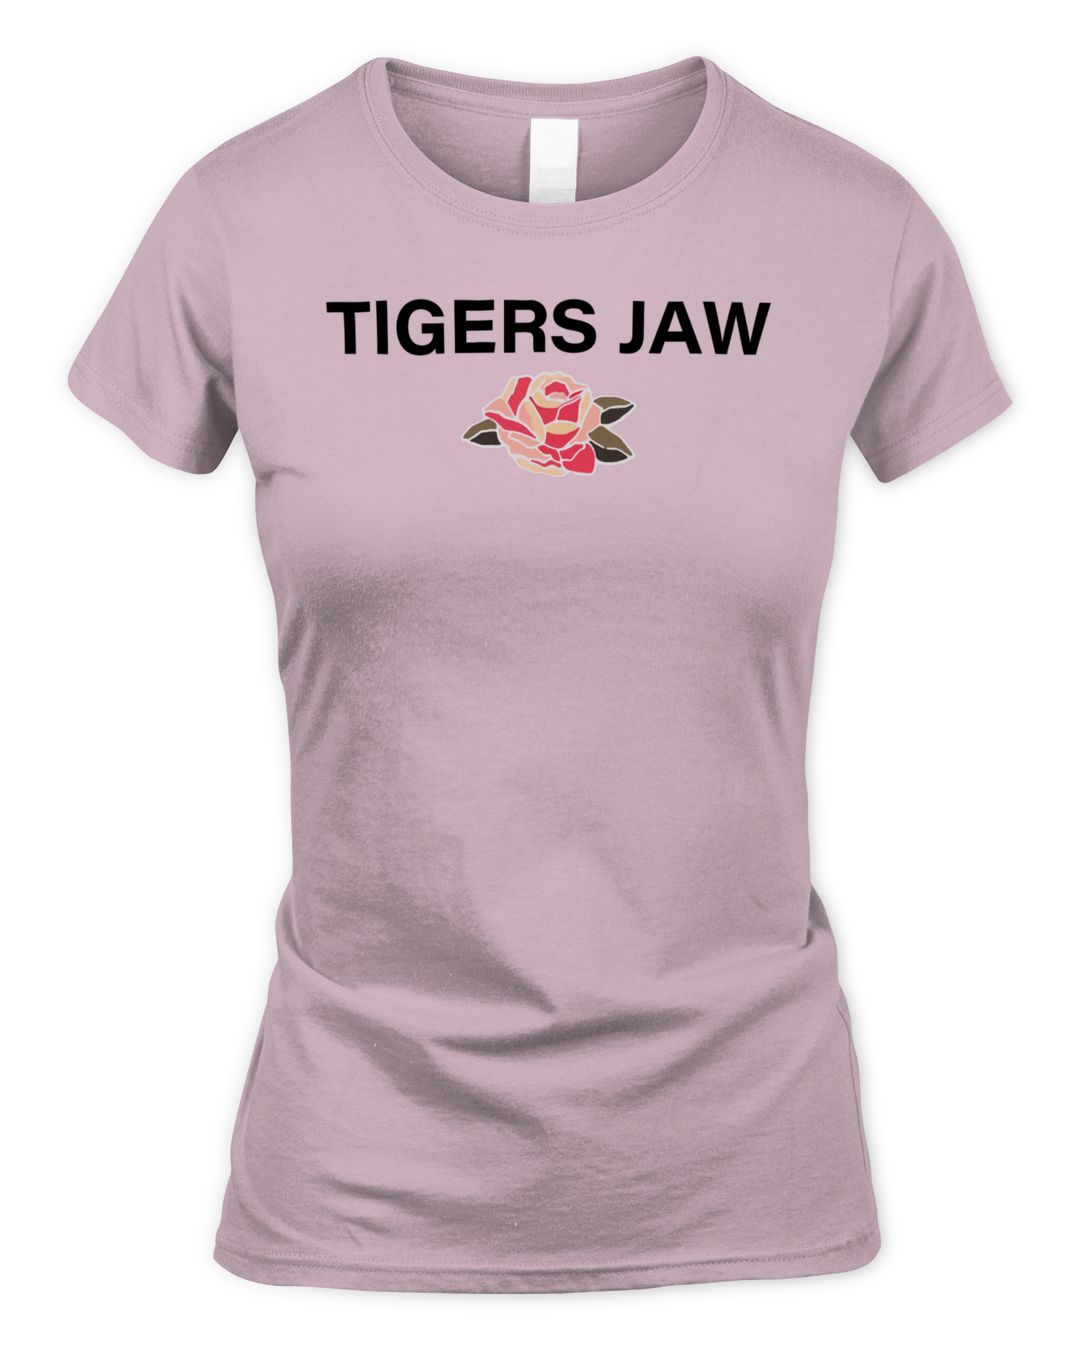 Tigers Jaw Merch Charmer Shirt